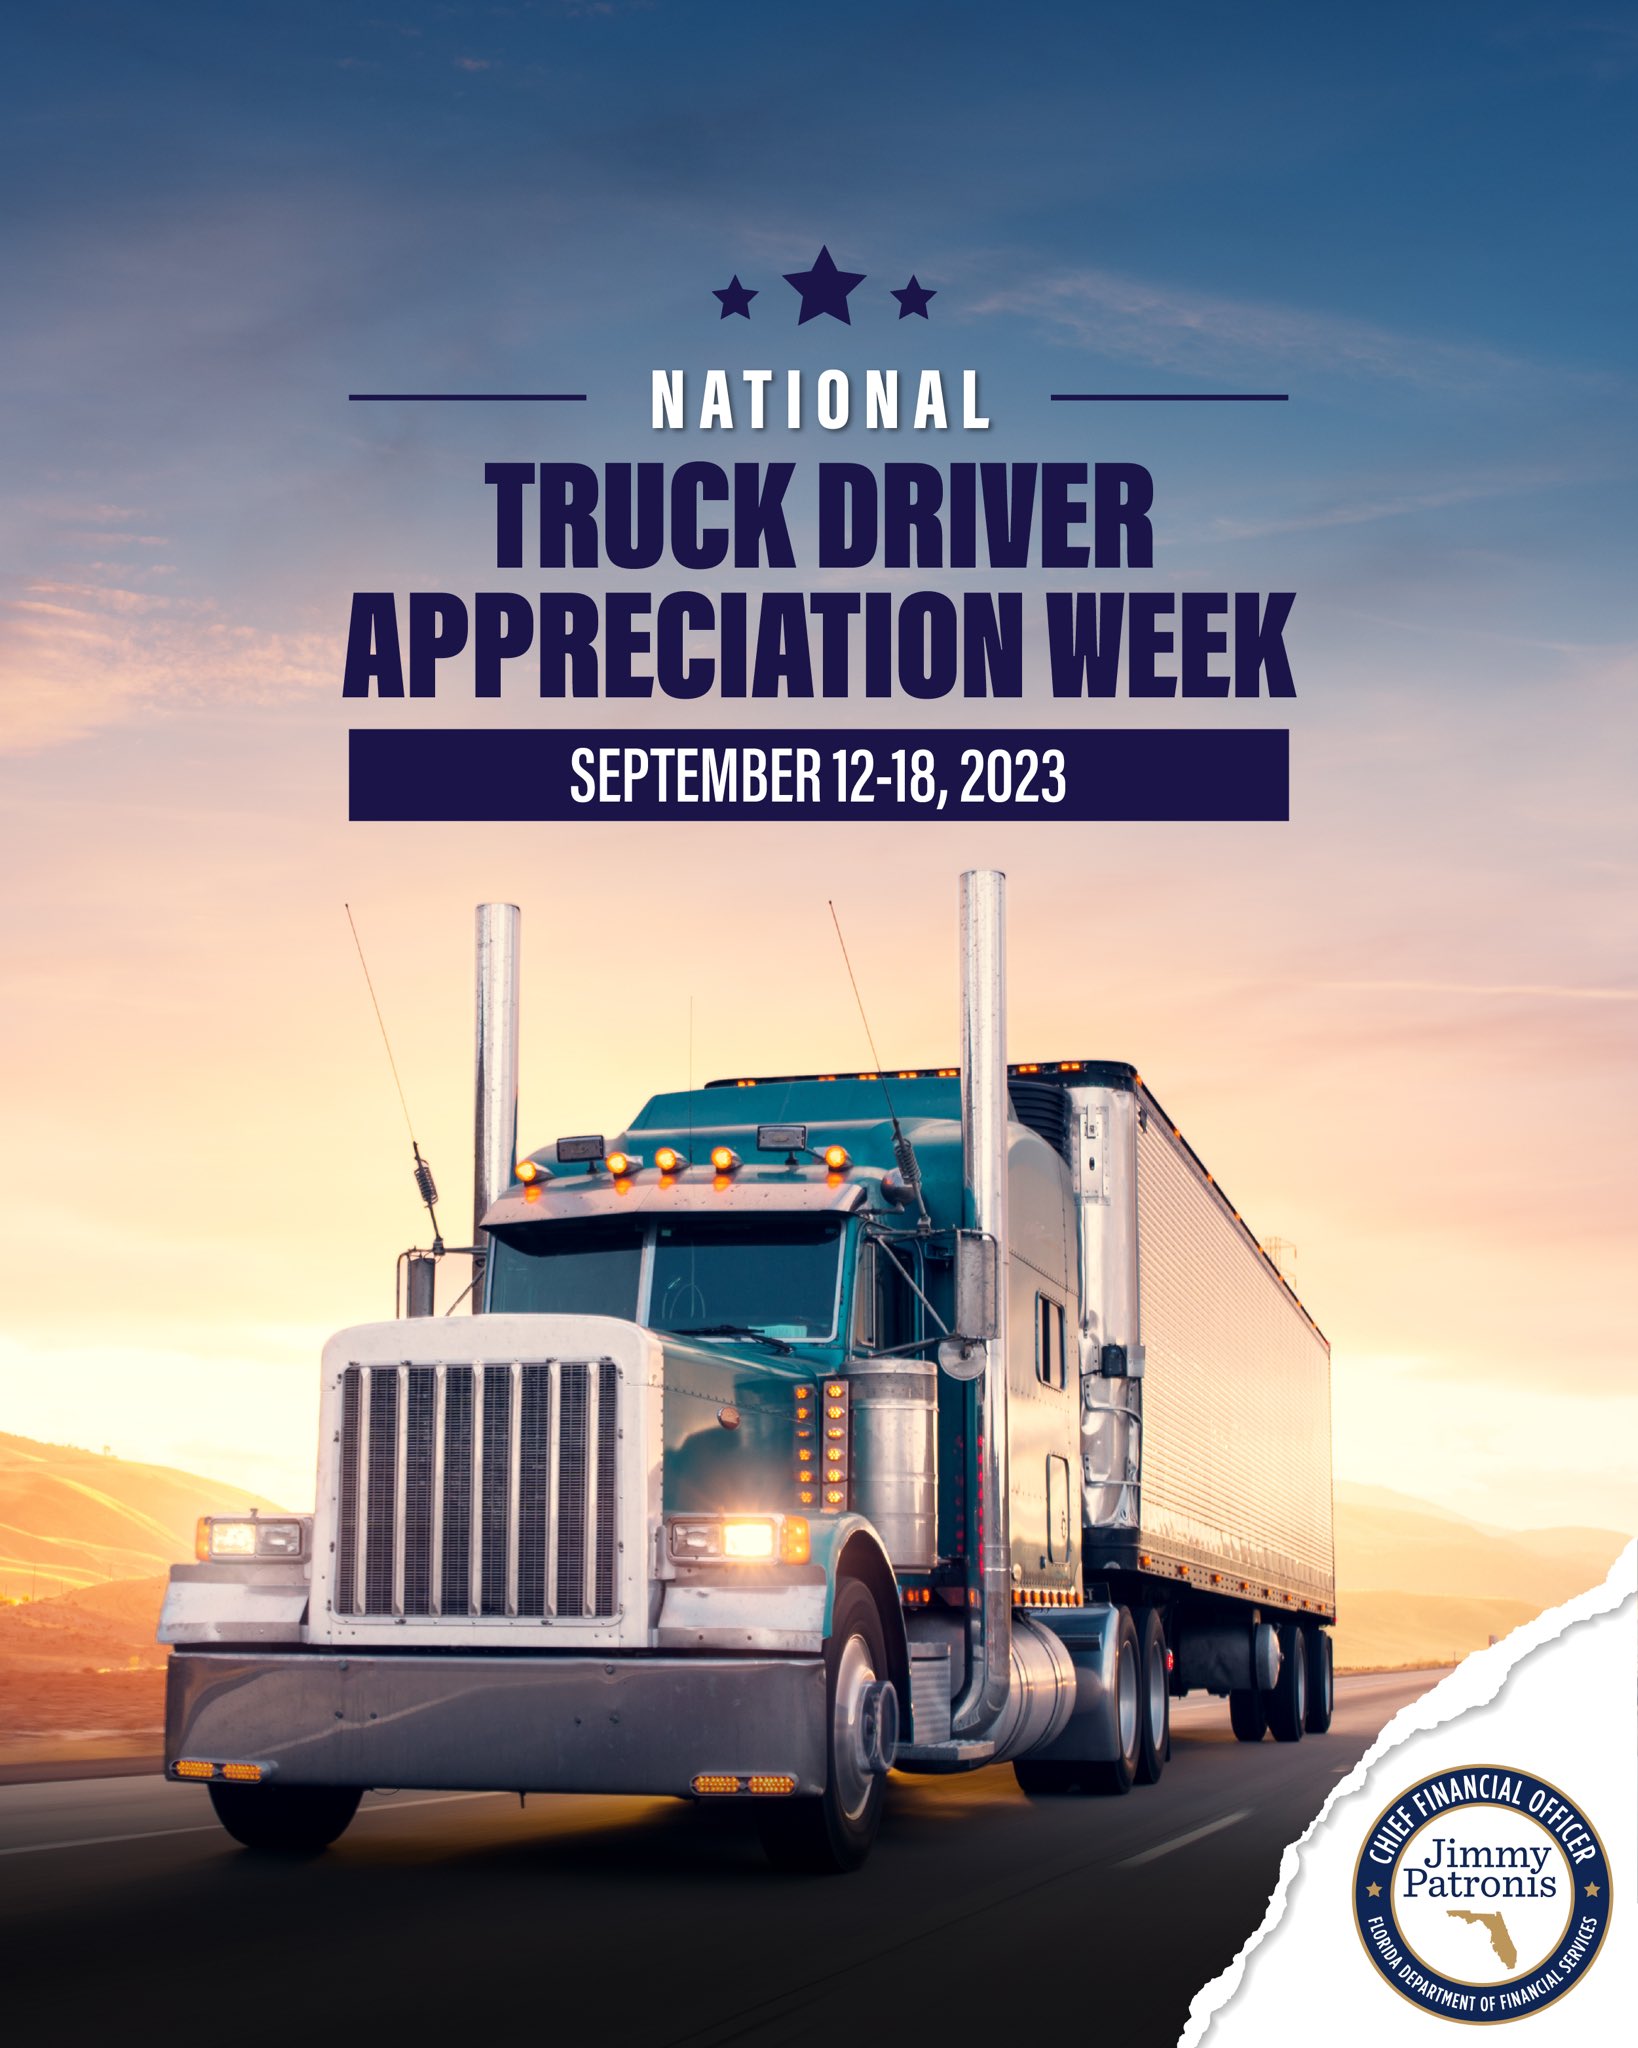 National Truck Driver Appreciation Week, September 12-18, 2023